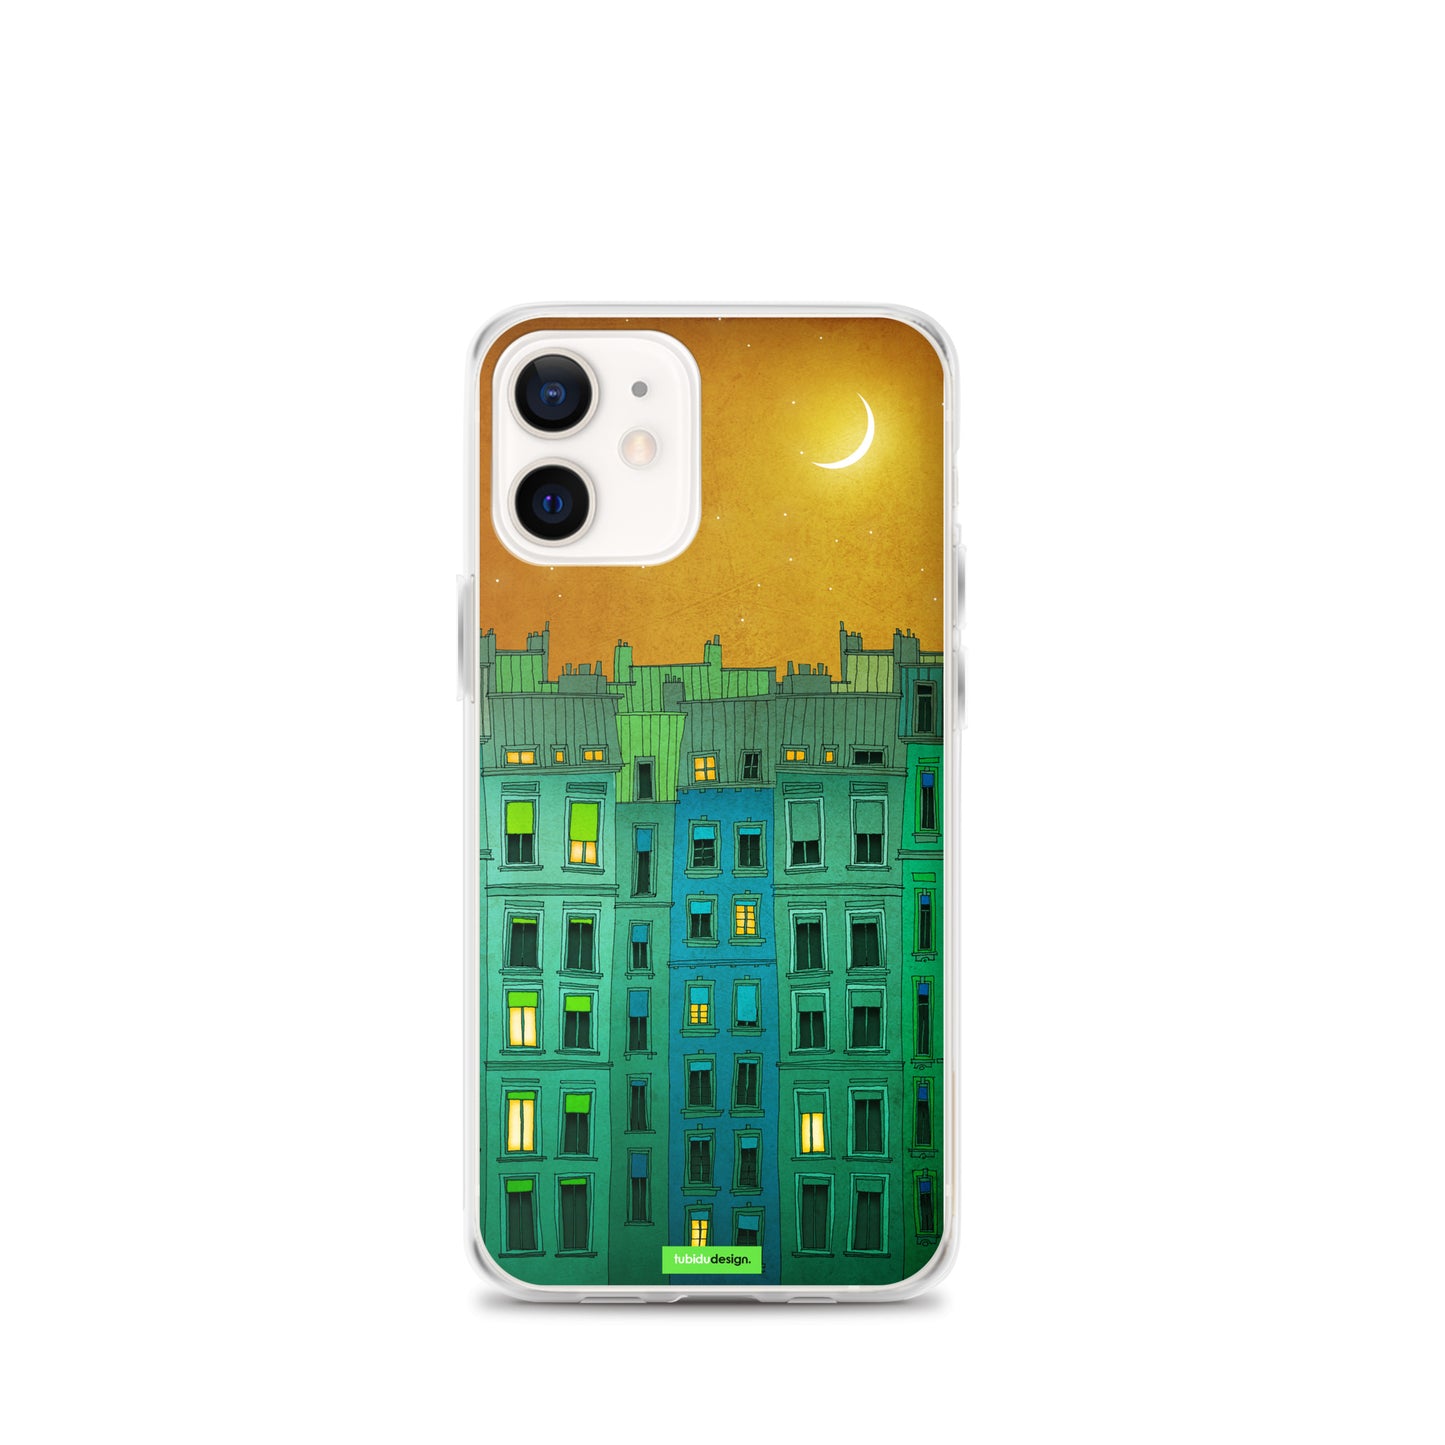 Golden night - Illustrated iPhone Case